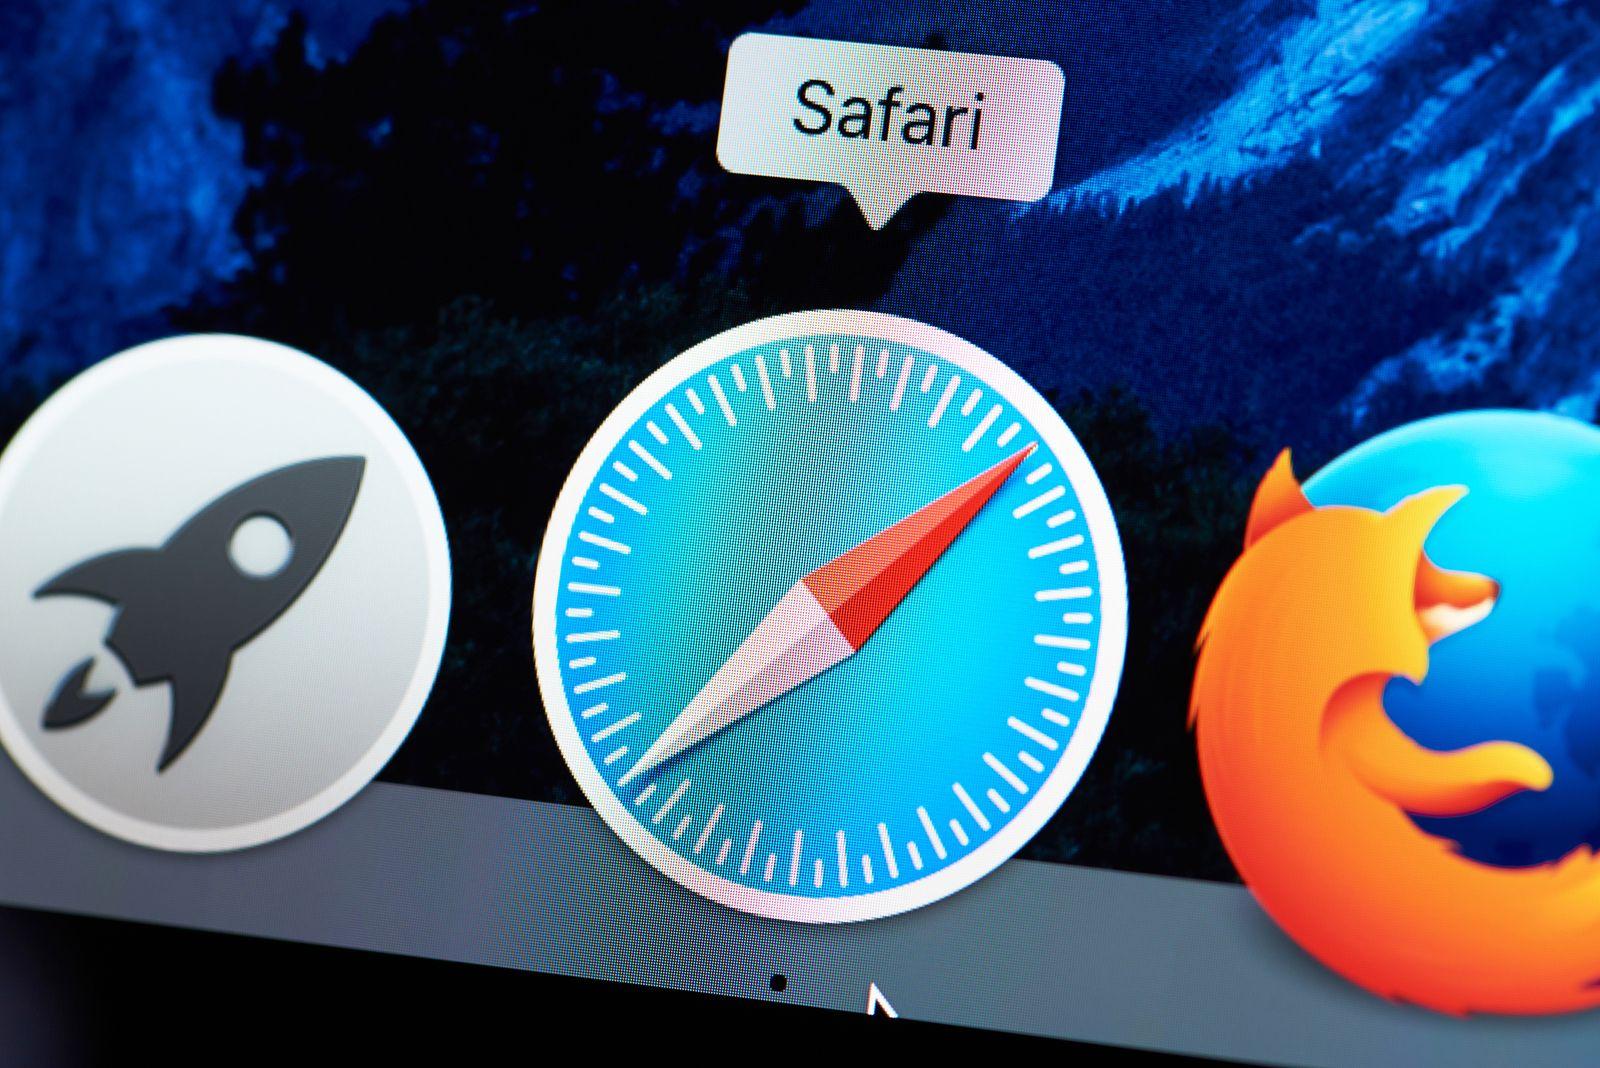 Apple Safari Logo - Apple Safari testing “Not Secure” warning for HTTP websites